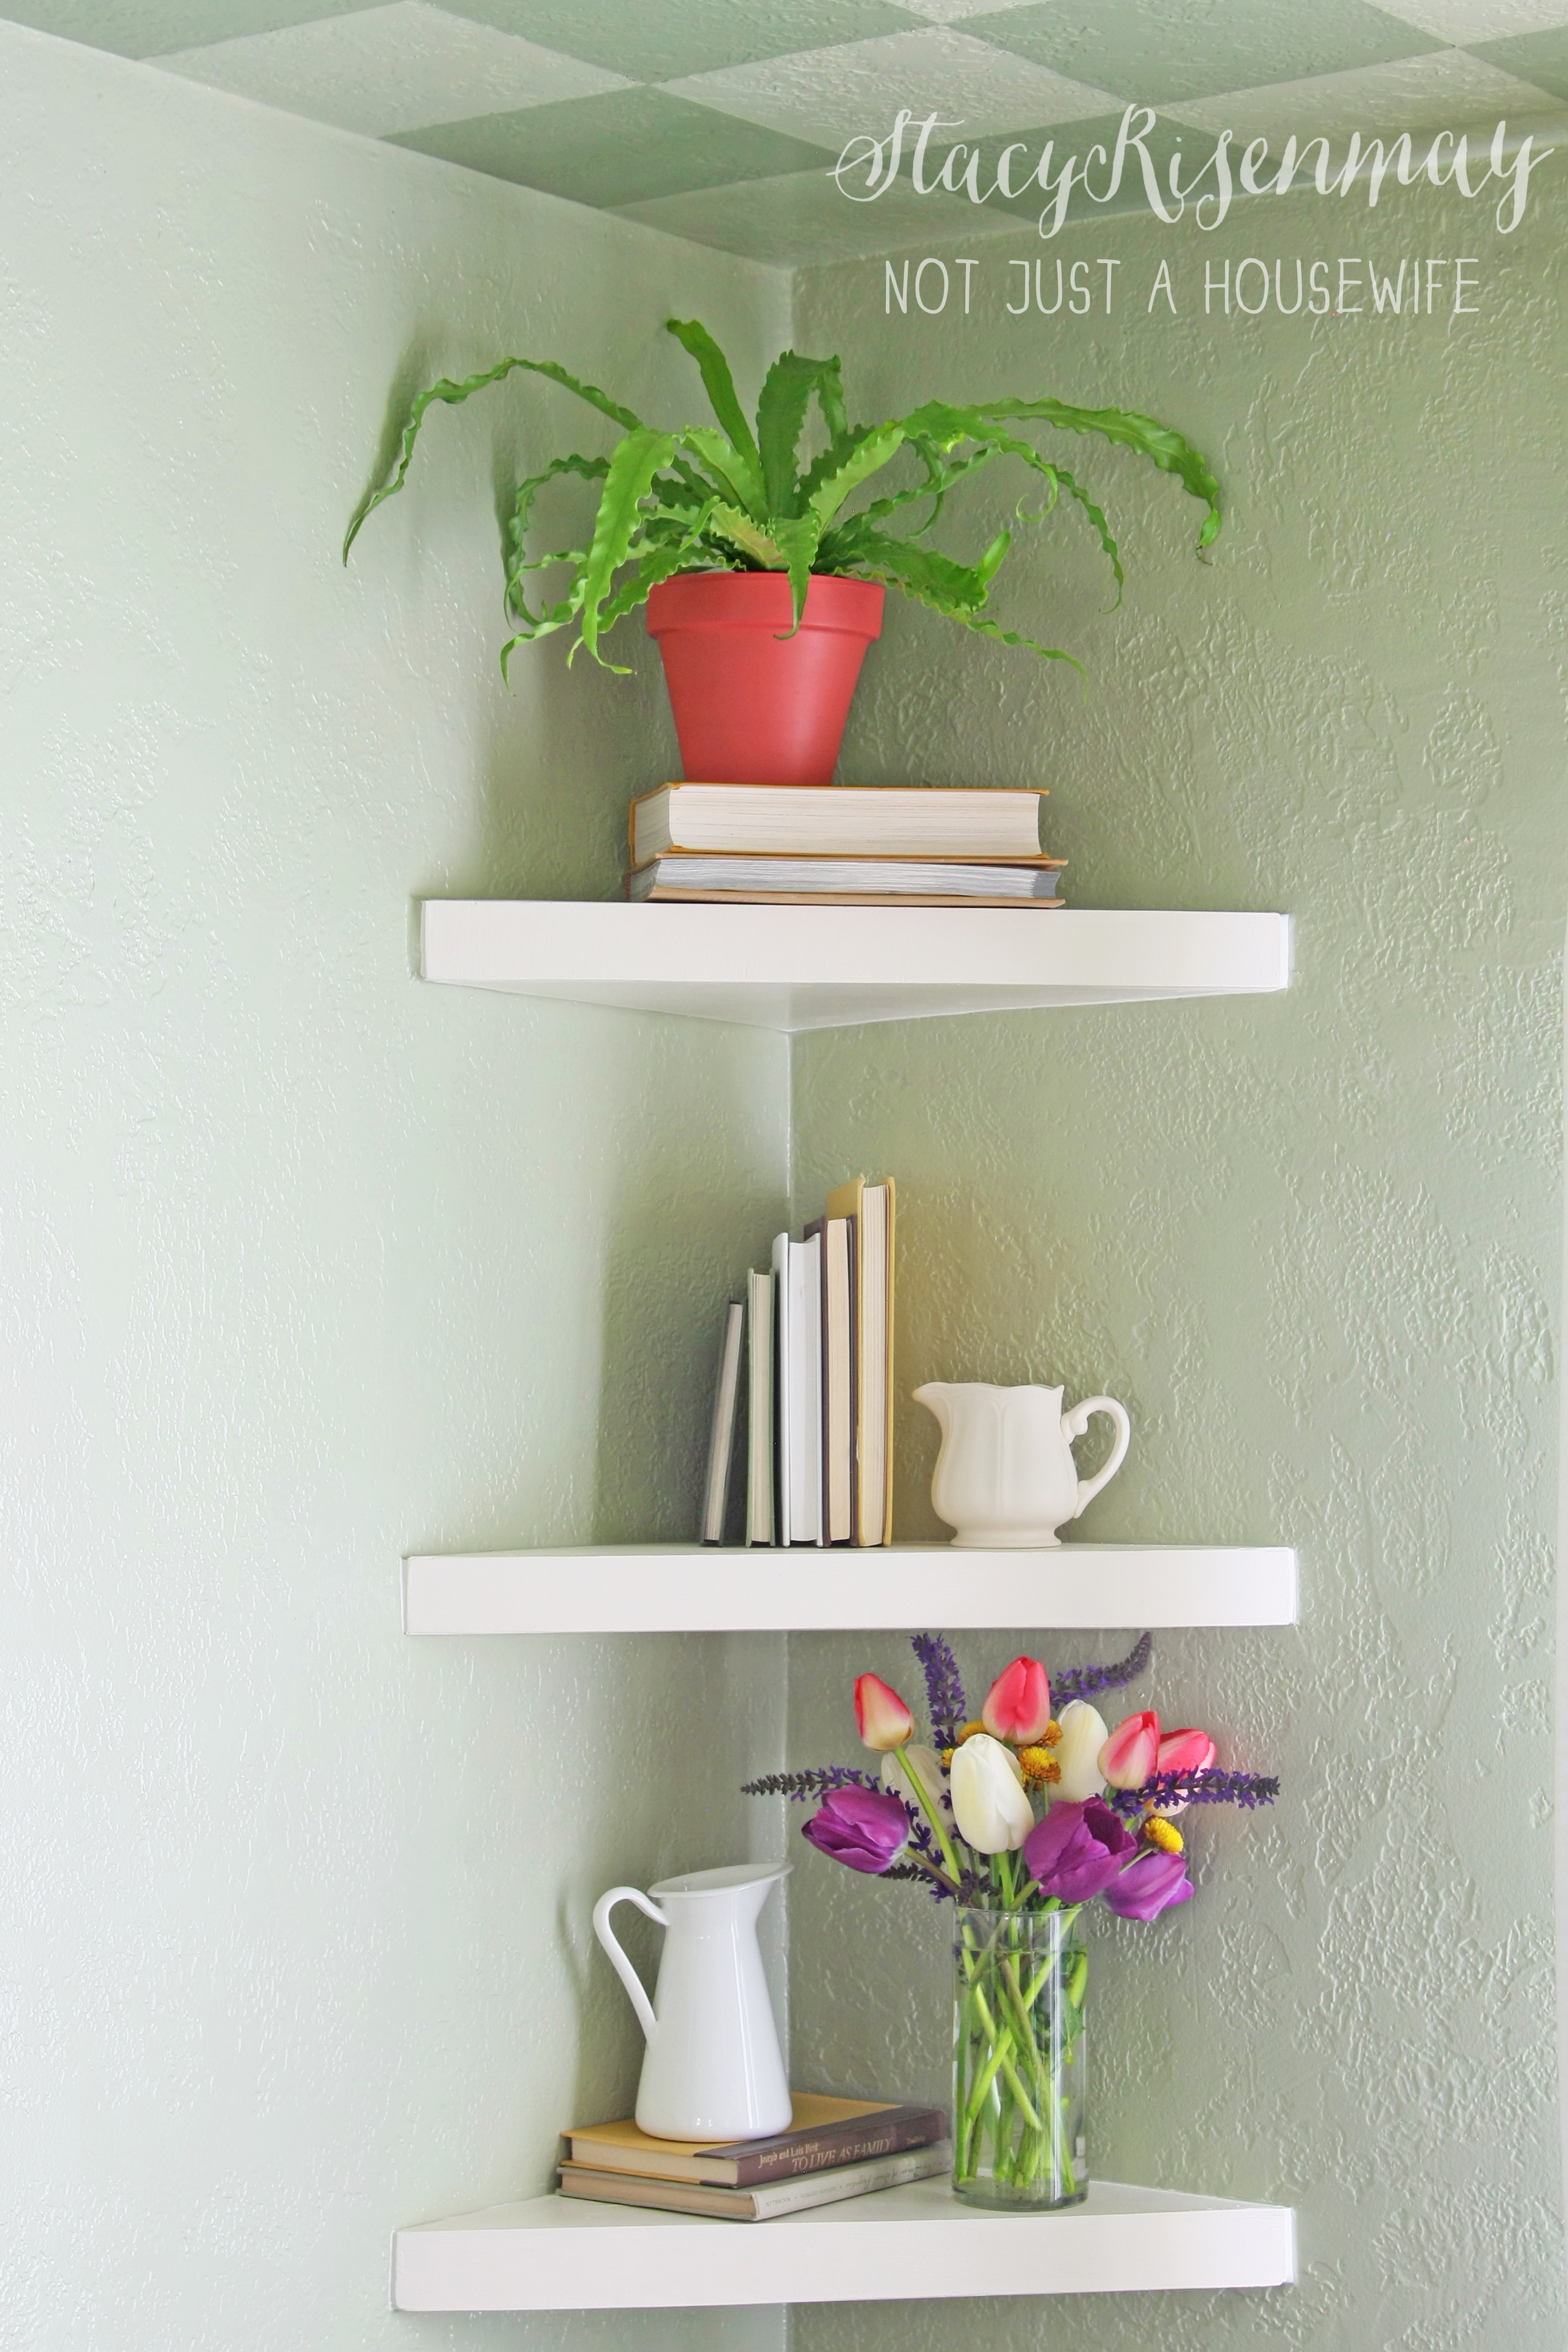 Best ideas about Floating Bookshelves DIY
. Save or Pin Floating Corner Shelves Now.